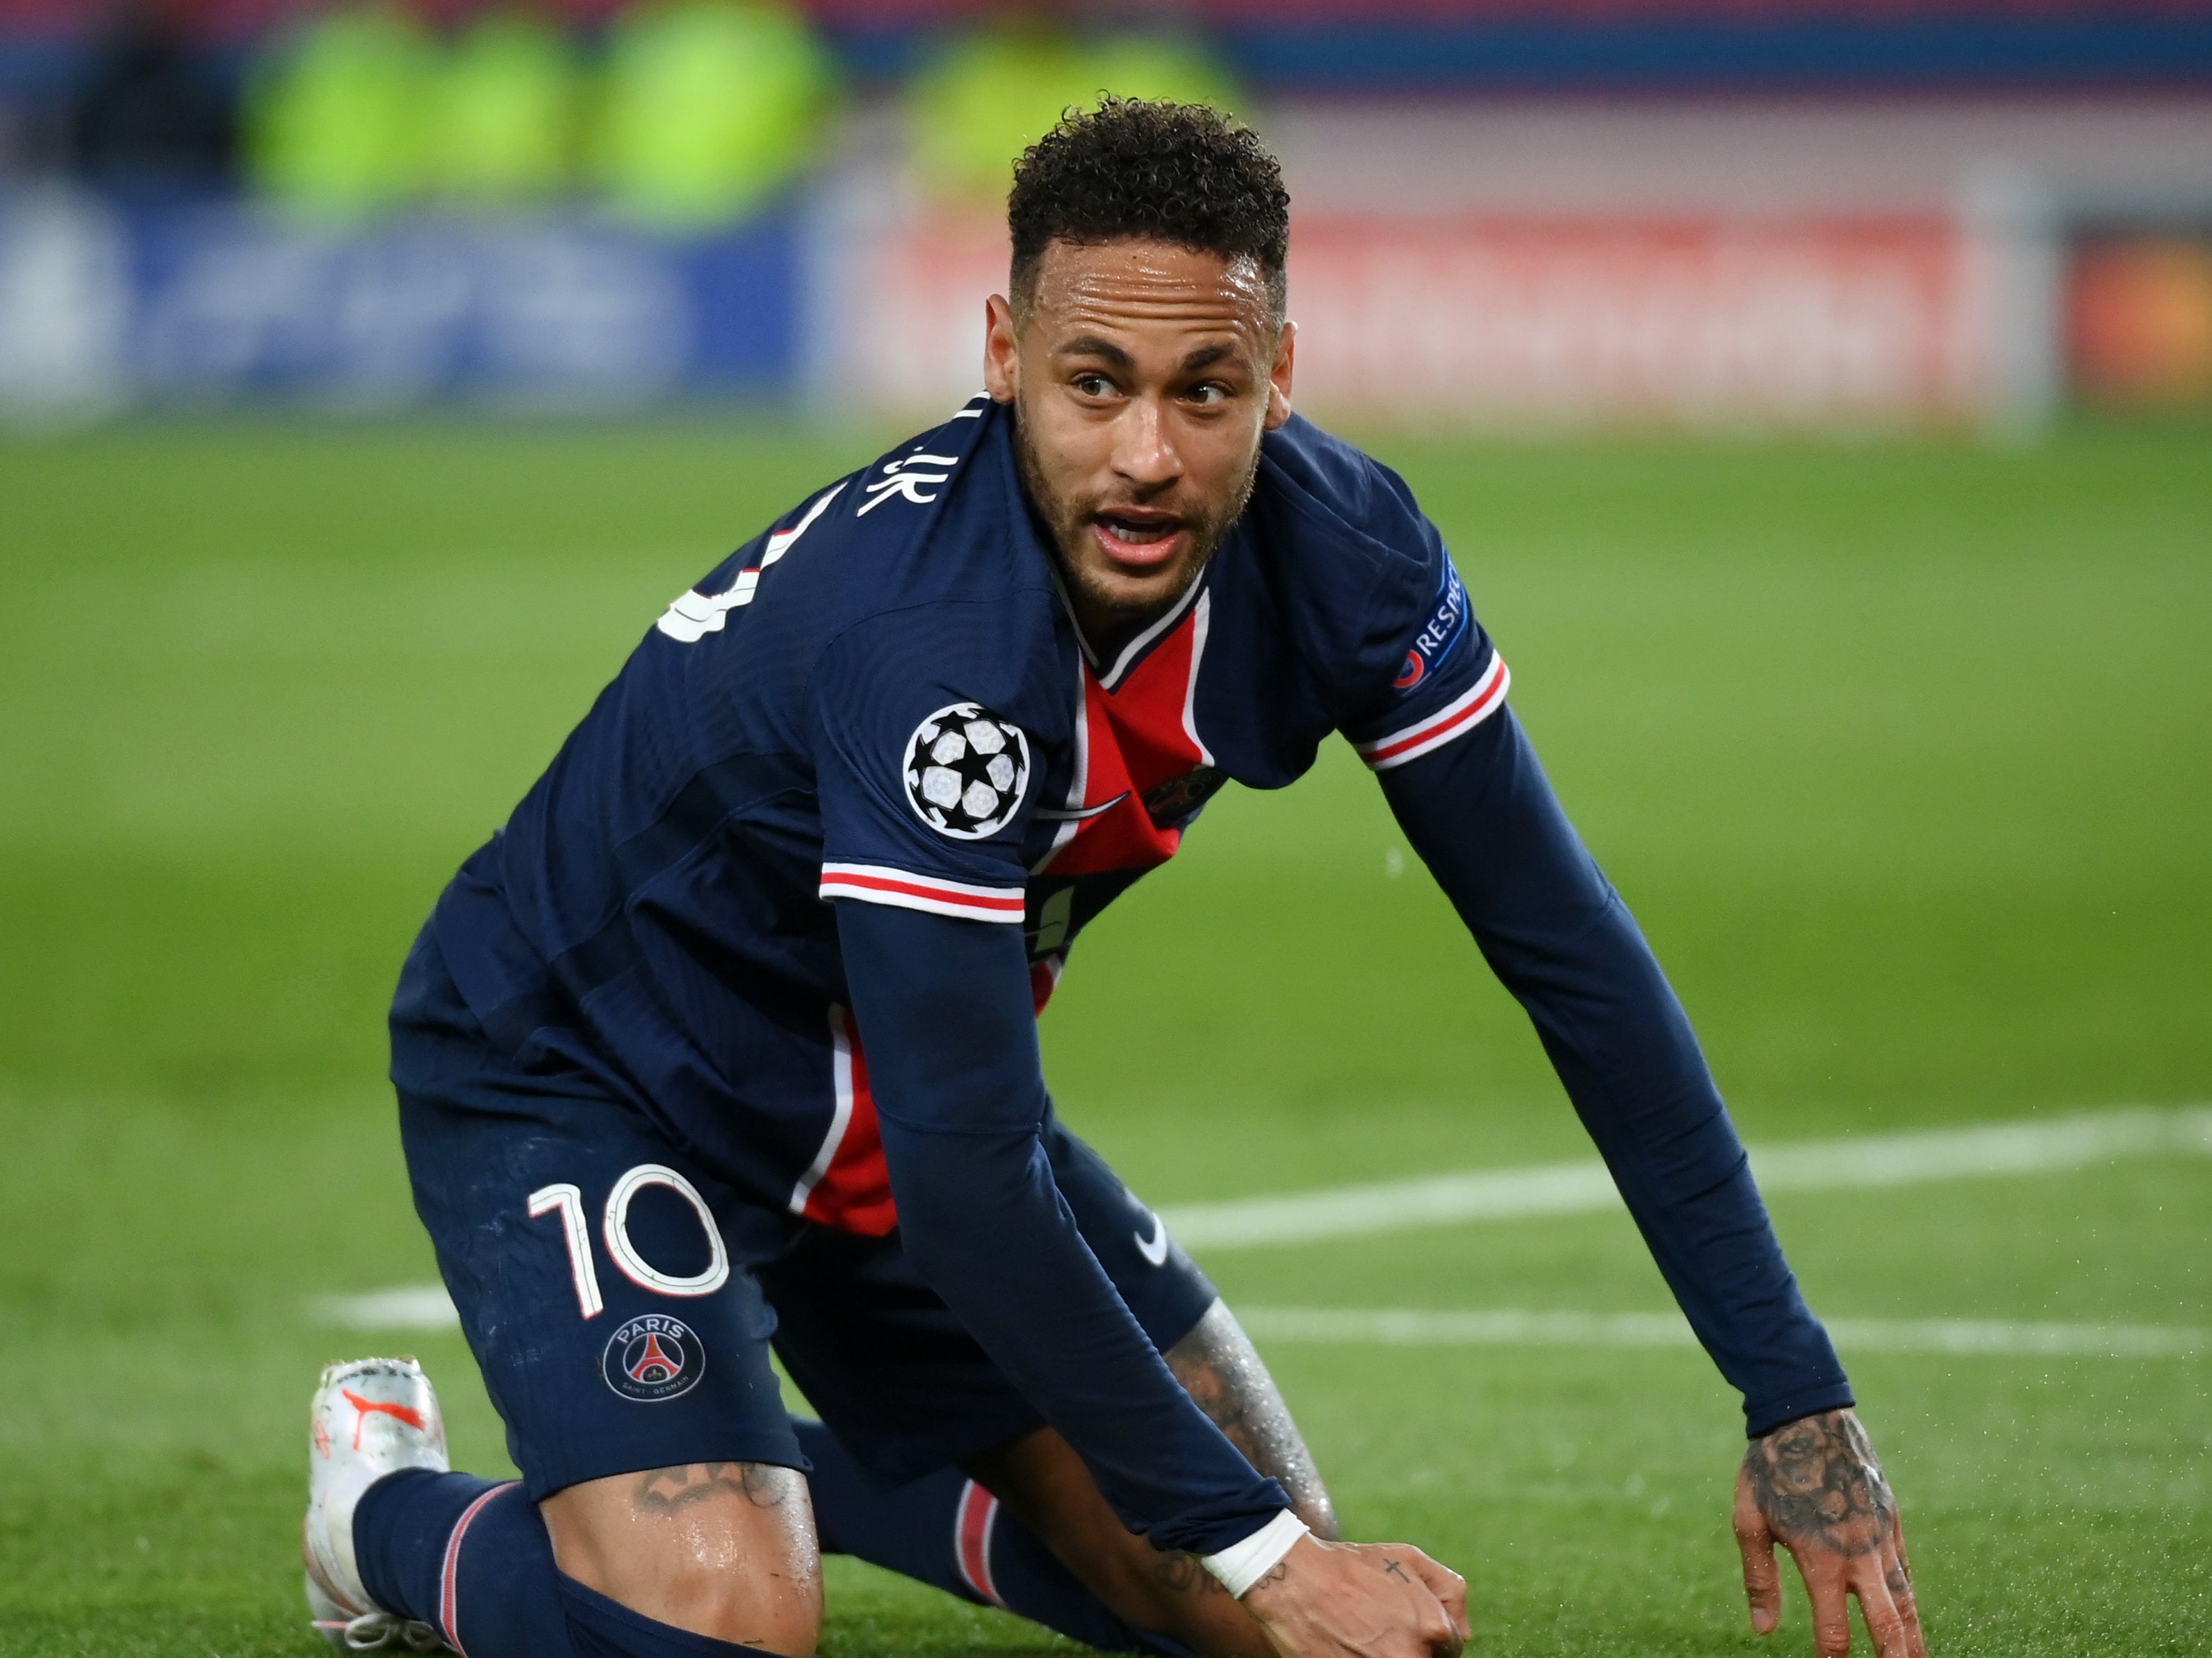 Paris Saint-Germain forward Neymar